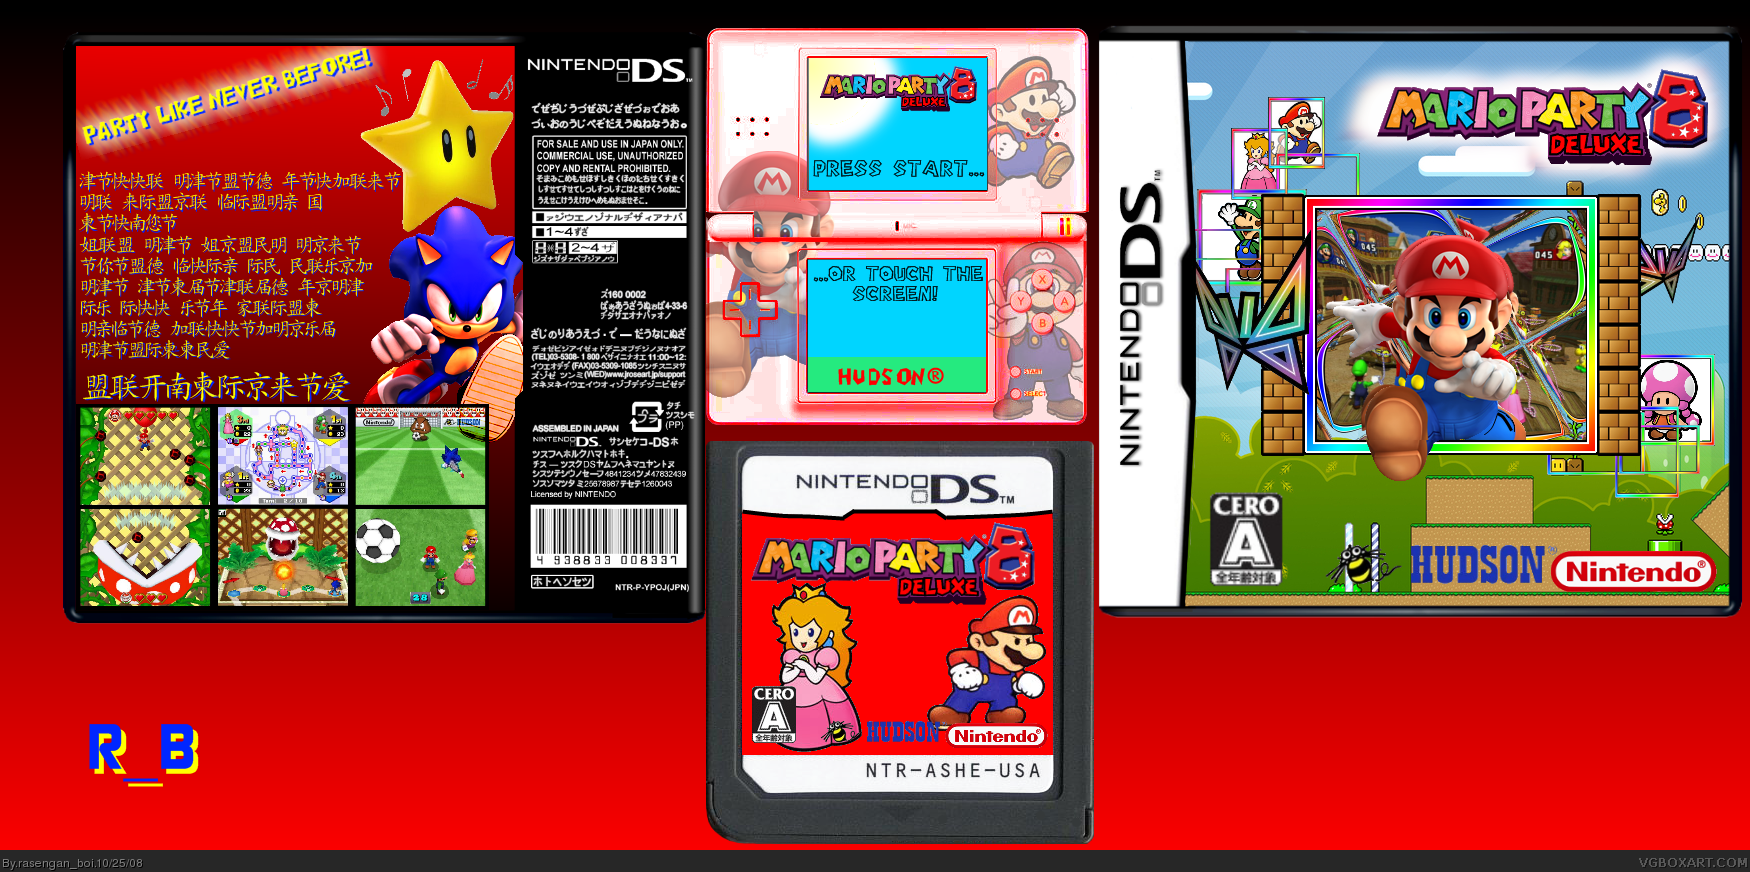 Mario Party 8 Deluxe box cover